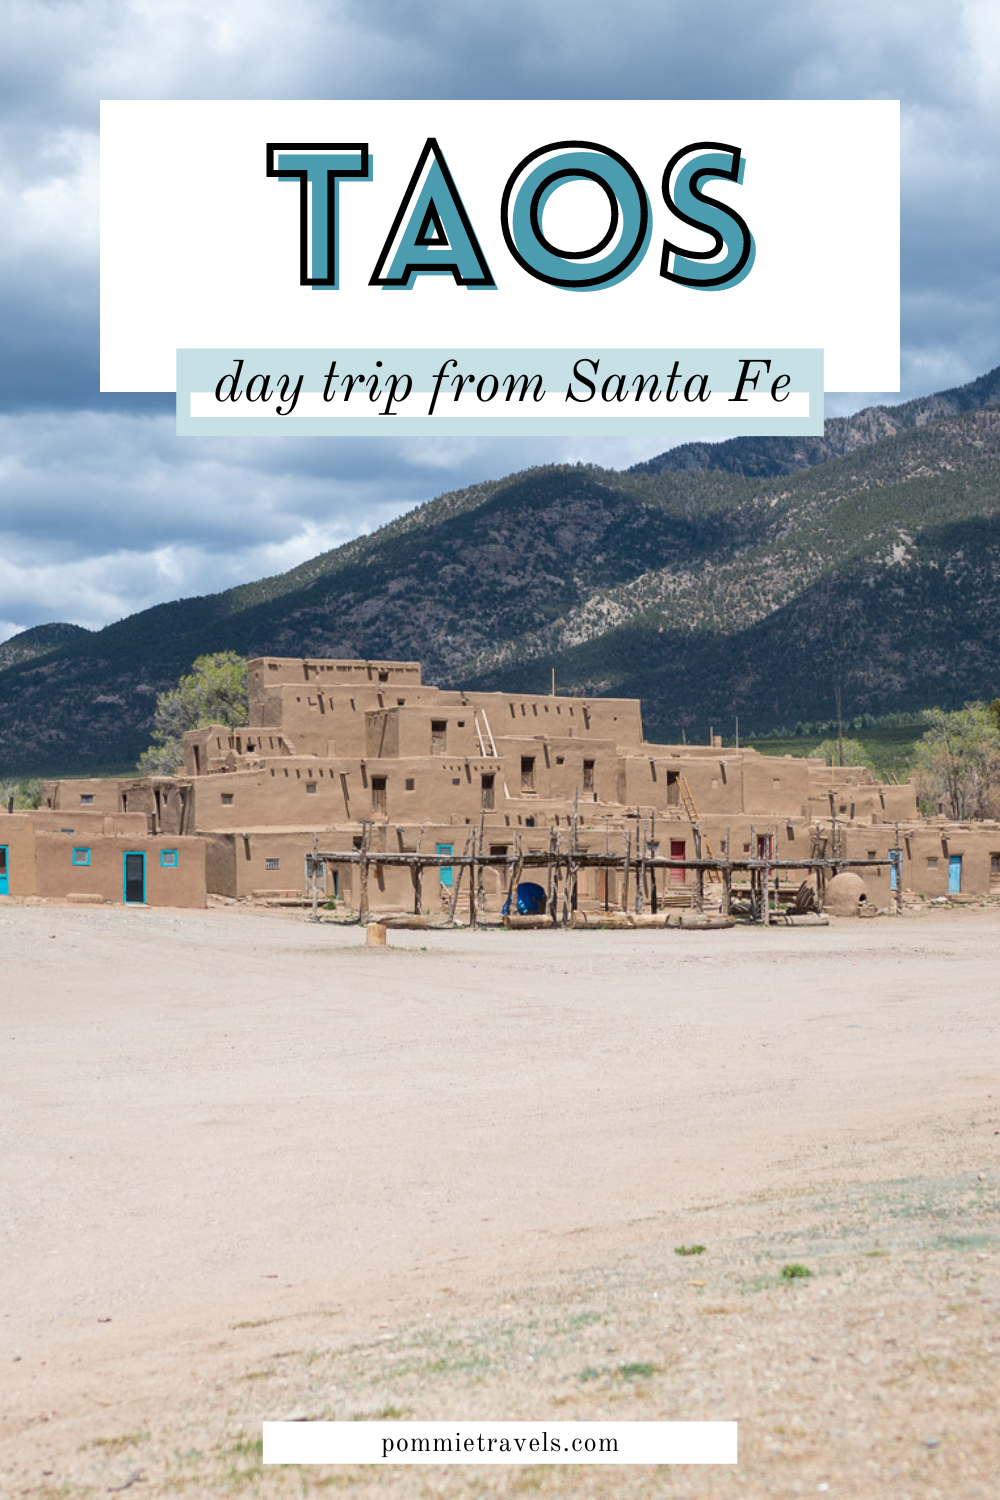 Taos day trip from Santa Fe